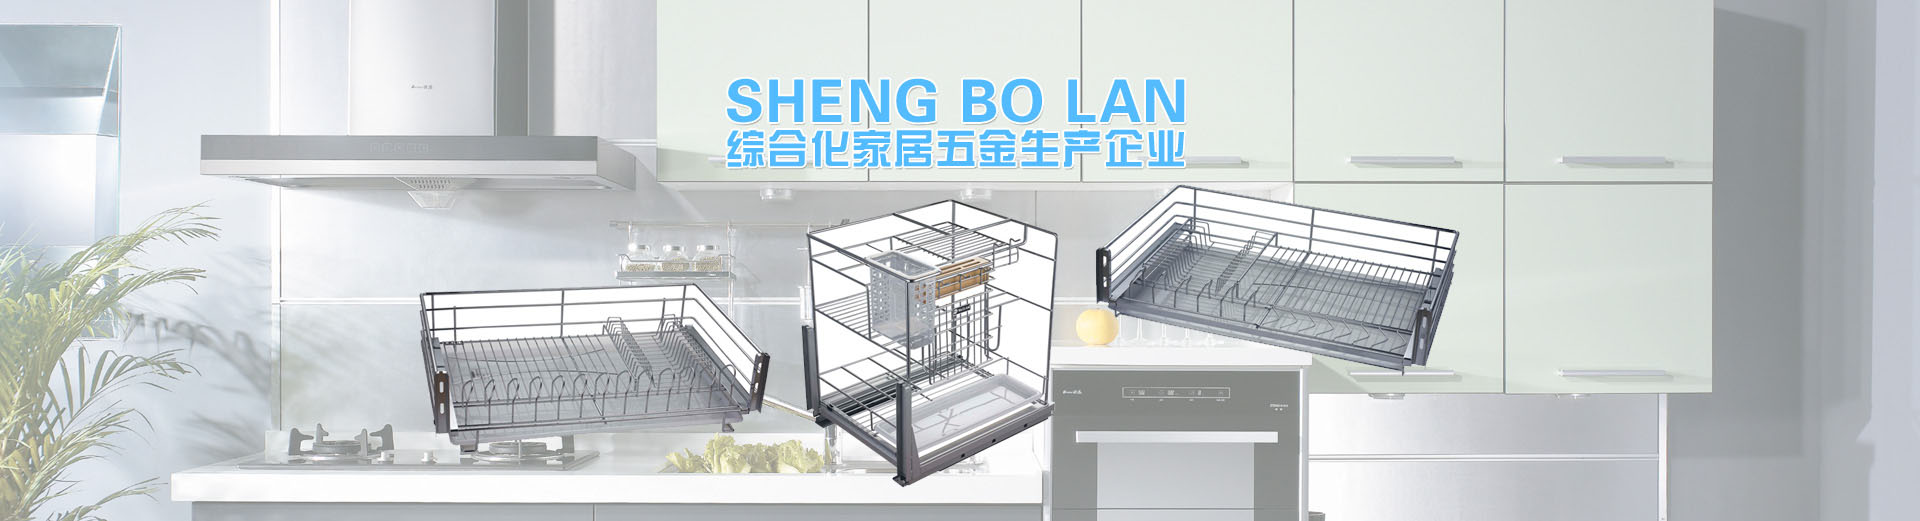 Dongguan ShengBoLan Hardware Products Co.Ltd